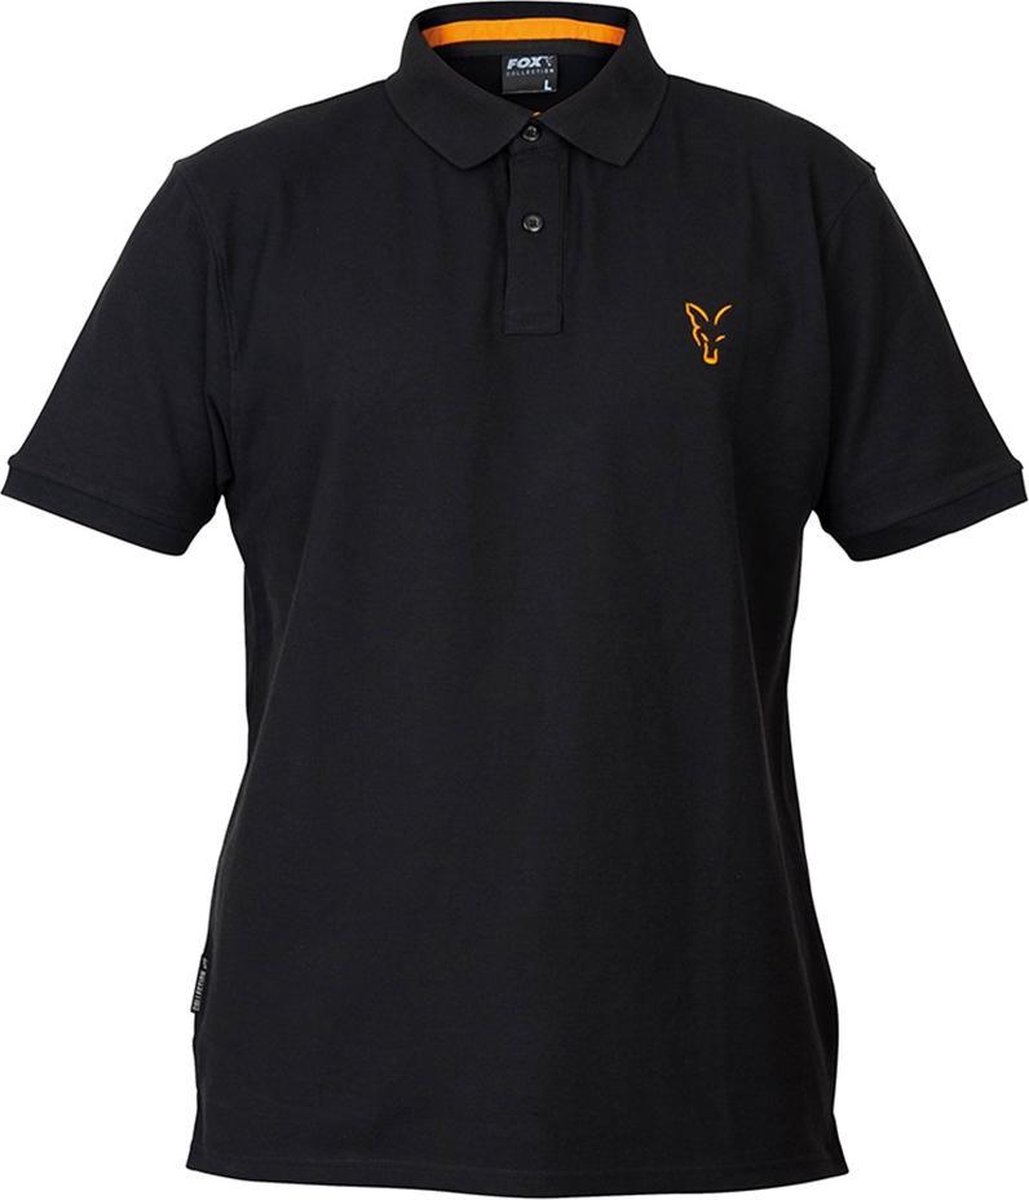 Fox Collection Black/Orange - Polo Shirt - Maat L - Zwart